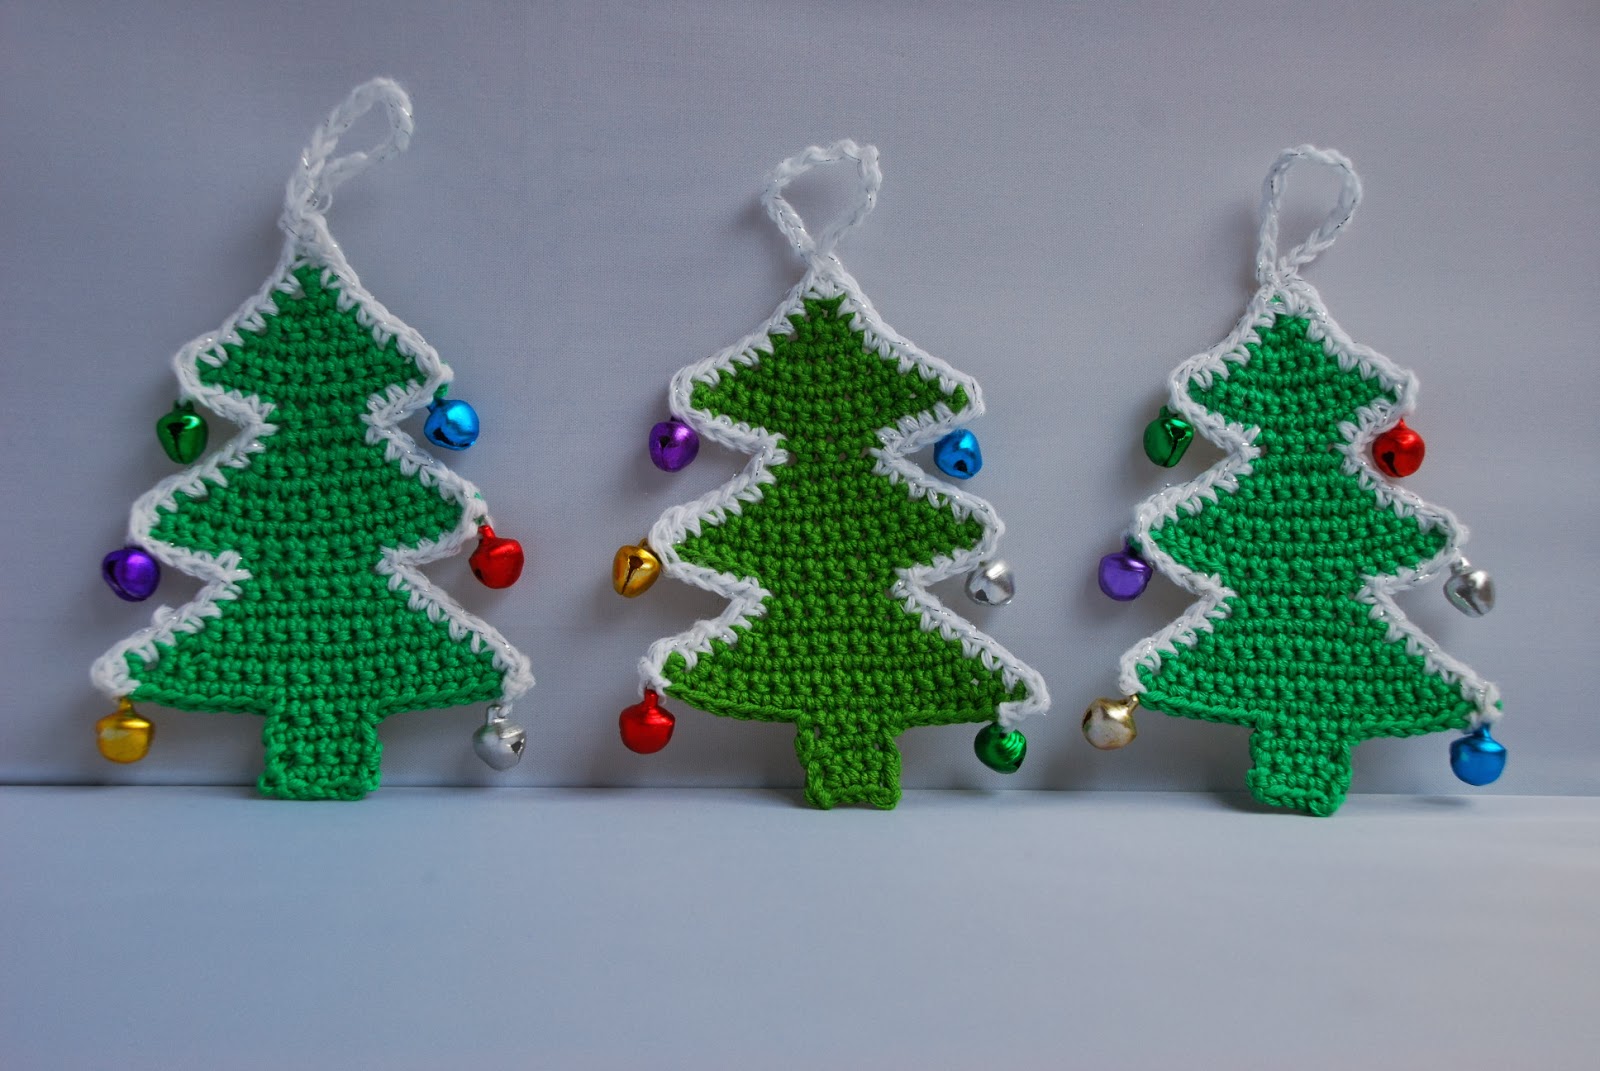 Crochet Christmas tree pattern and tutorial: Amjaylou designed crochet ...